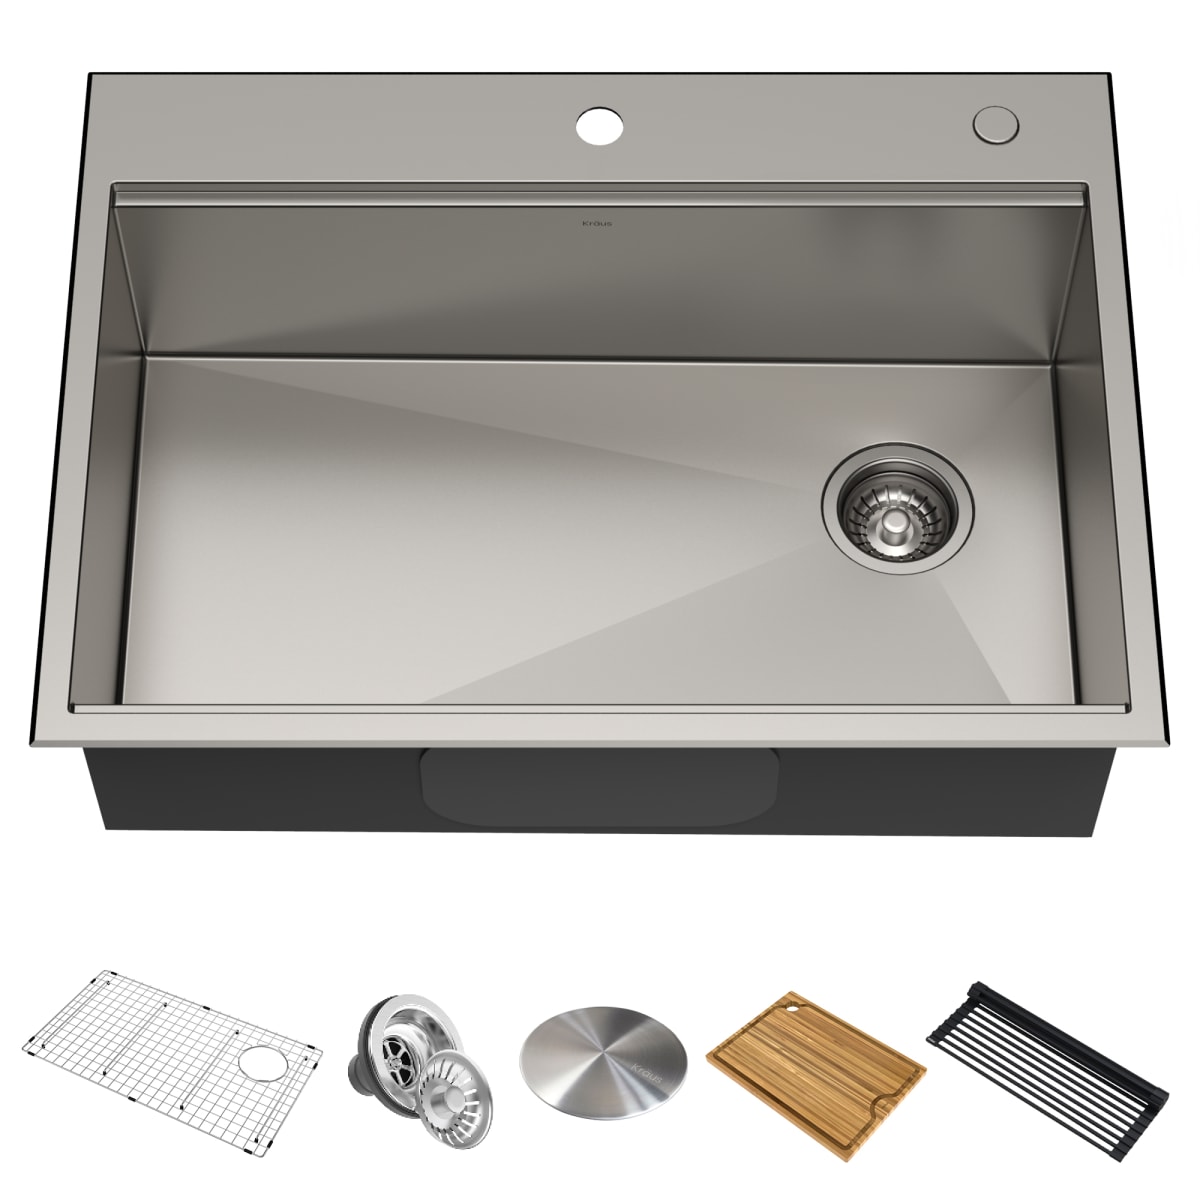 Kraus Sink Accessories: Cutting Board, Strainer, Drying Rack, Hardware